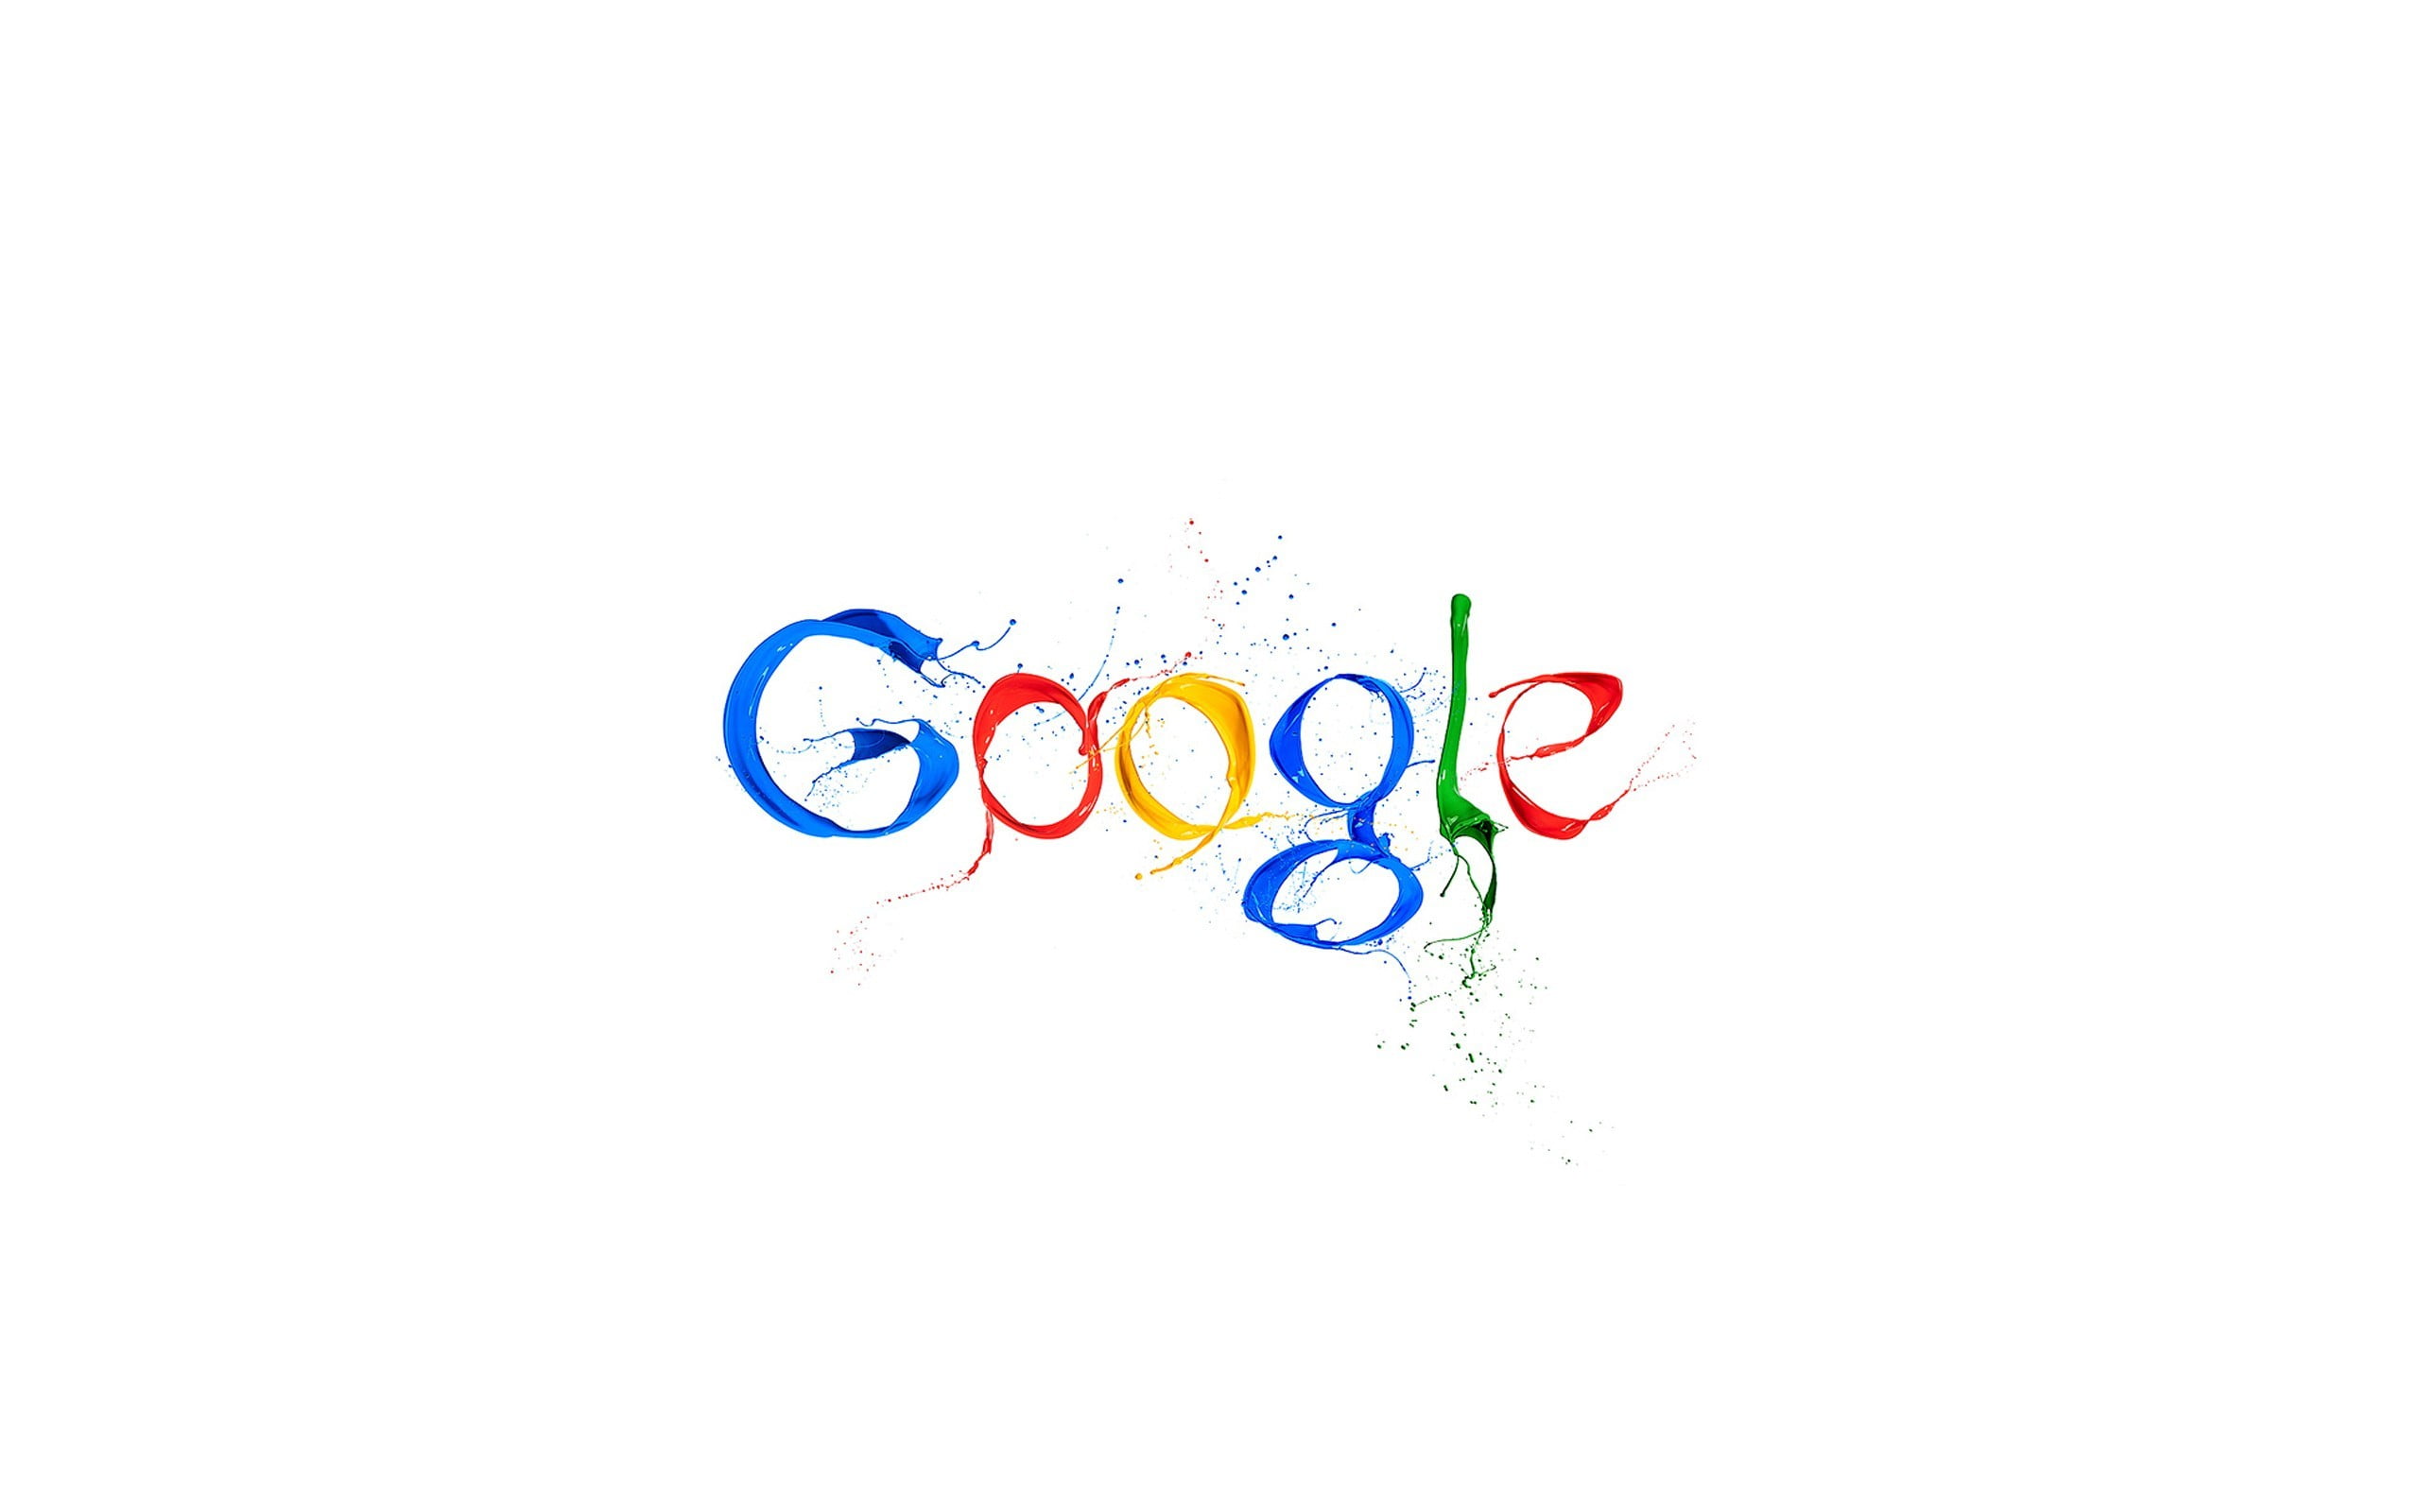 Google logo, studio shot, copy space, no people, white background